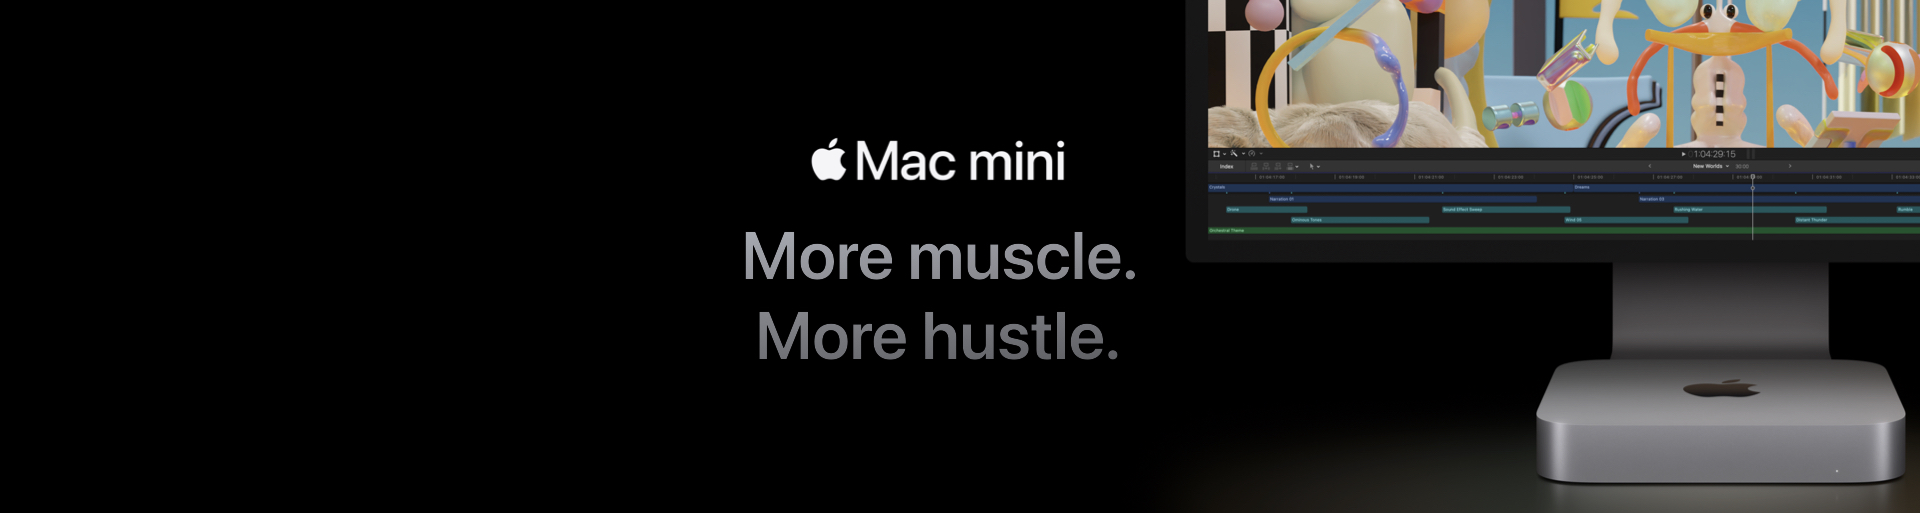 Mac mini. More muscle. More hustle.